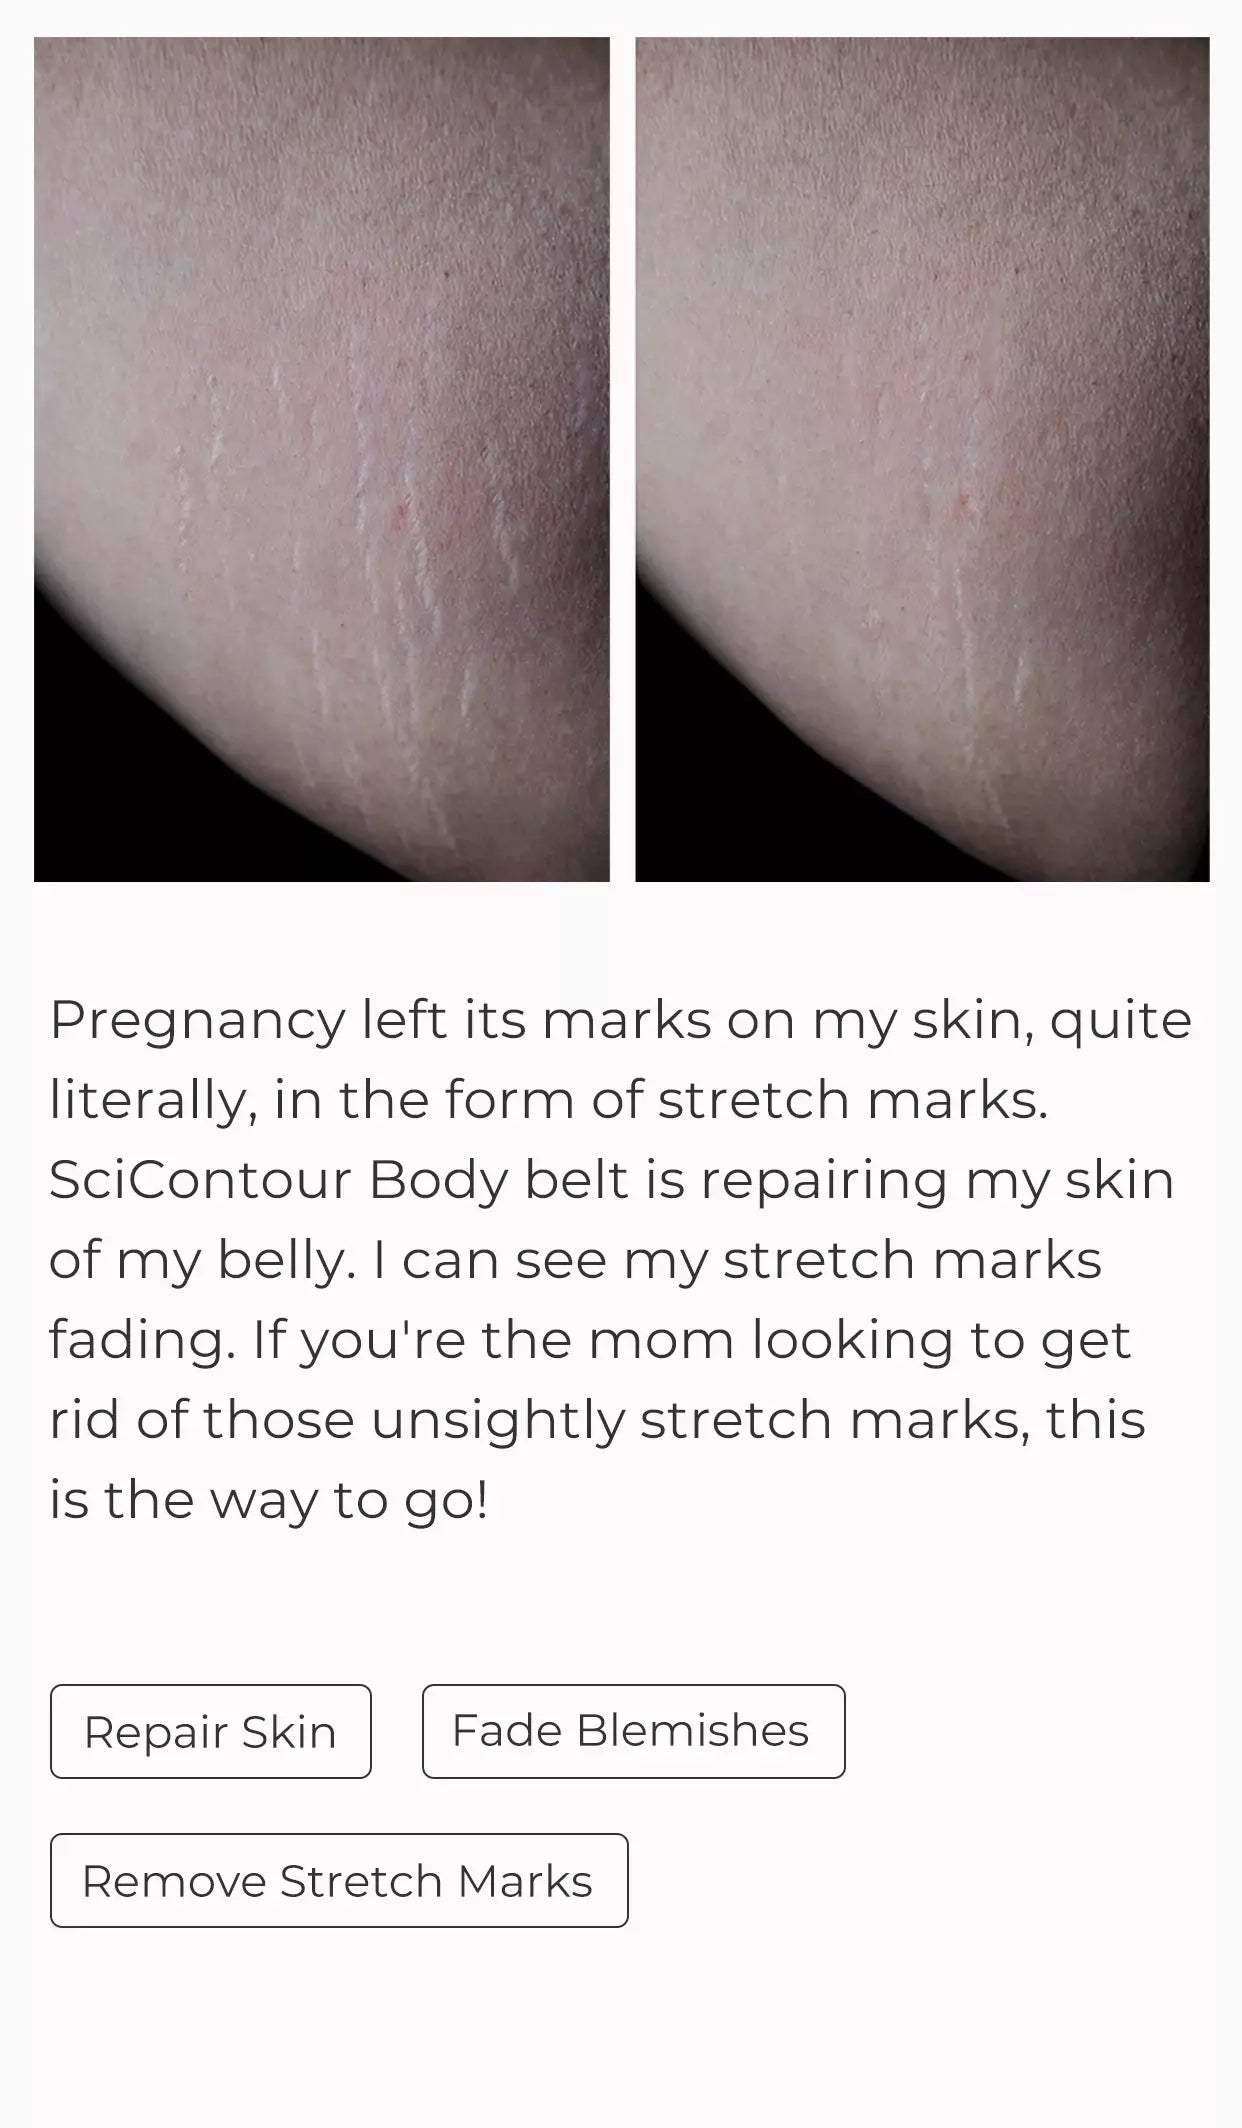 Good feedback from customer- Repair my skin 